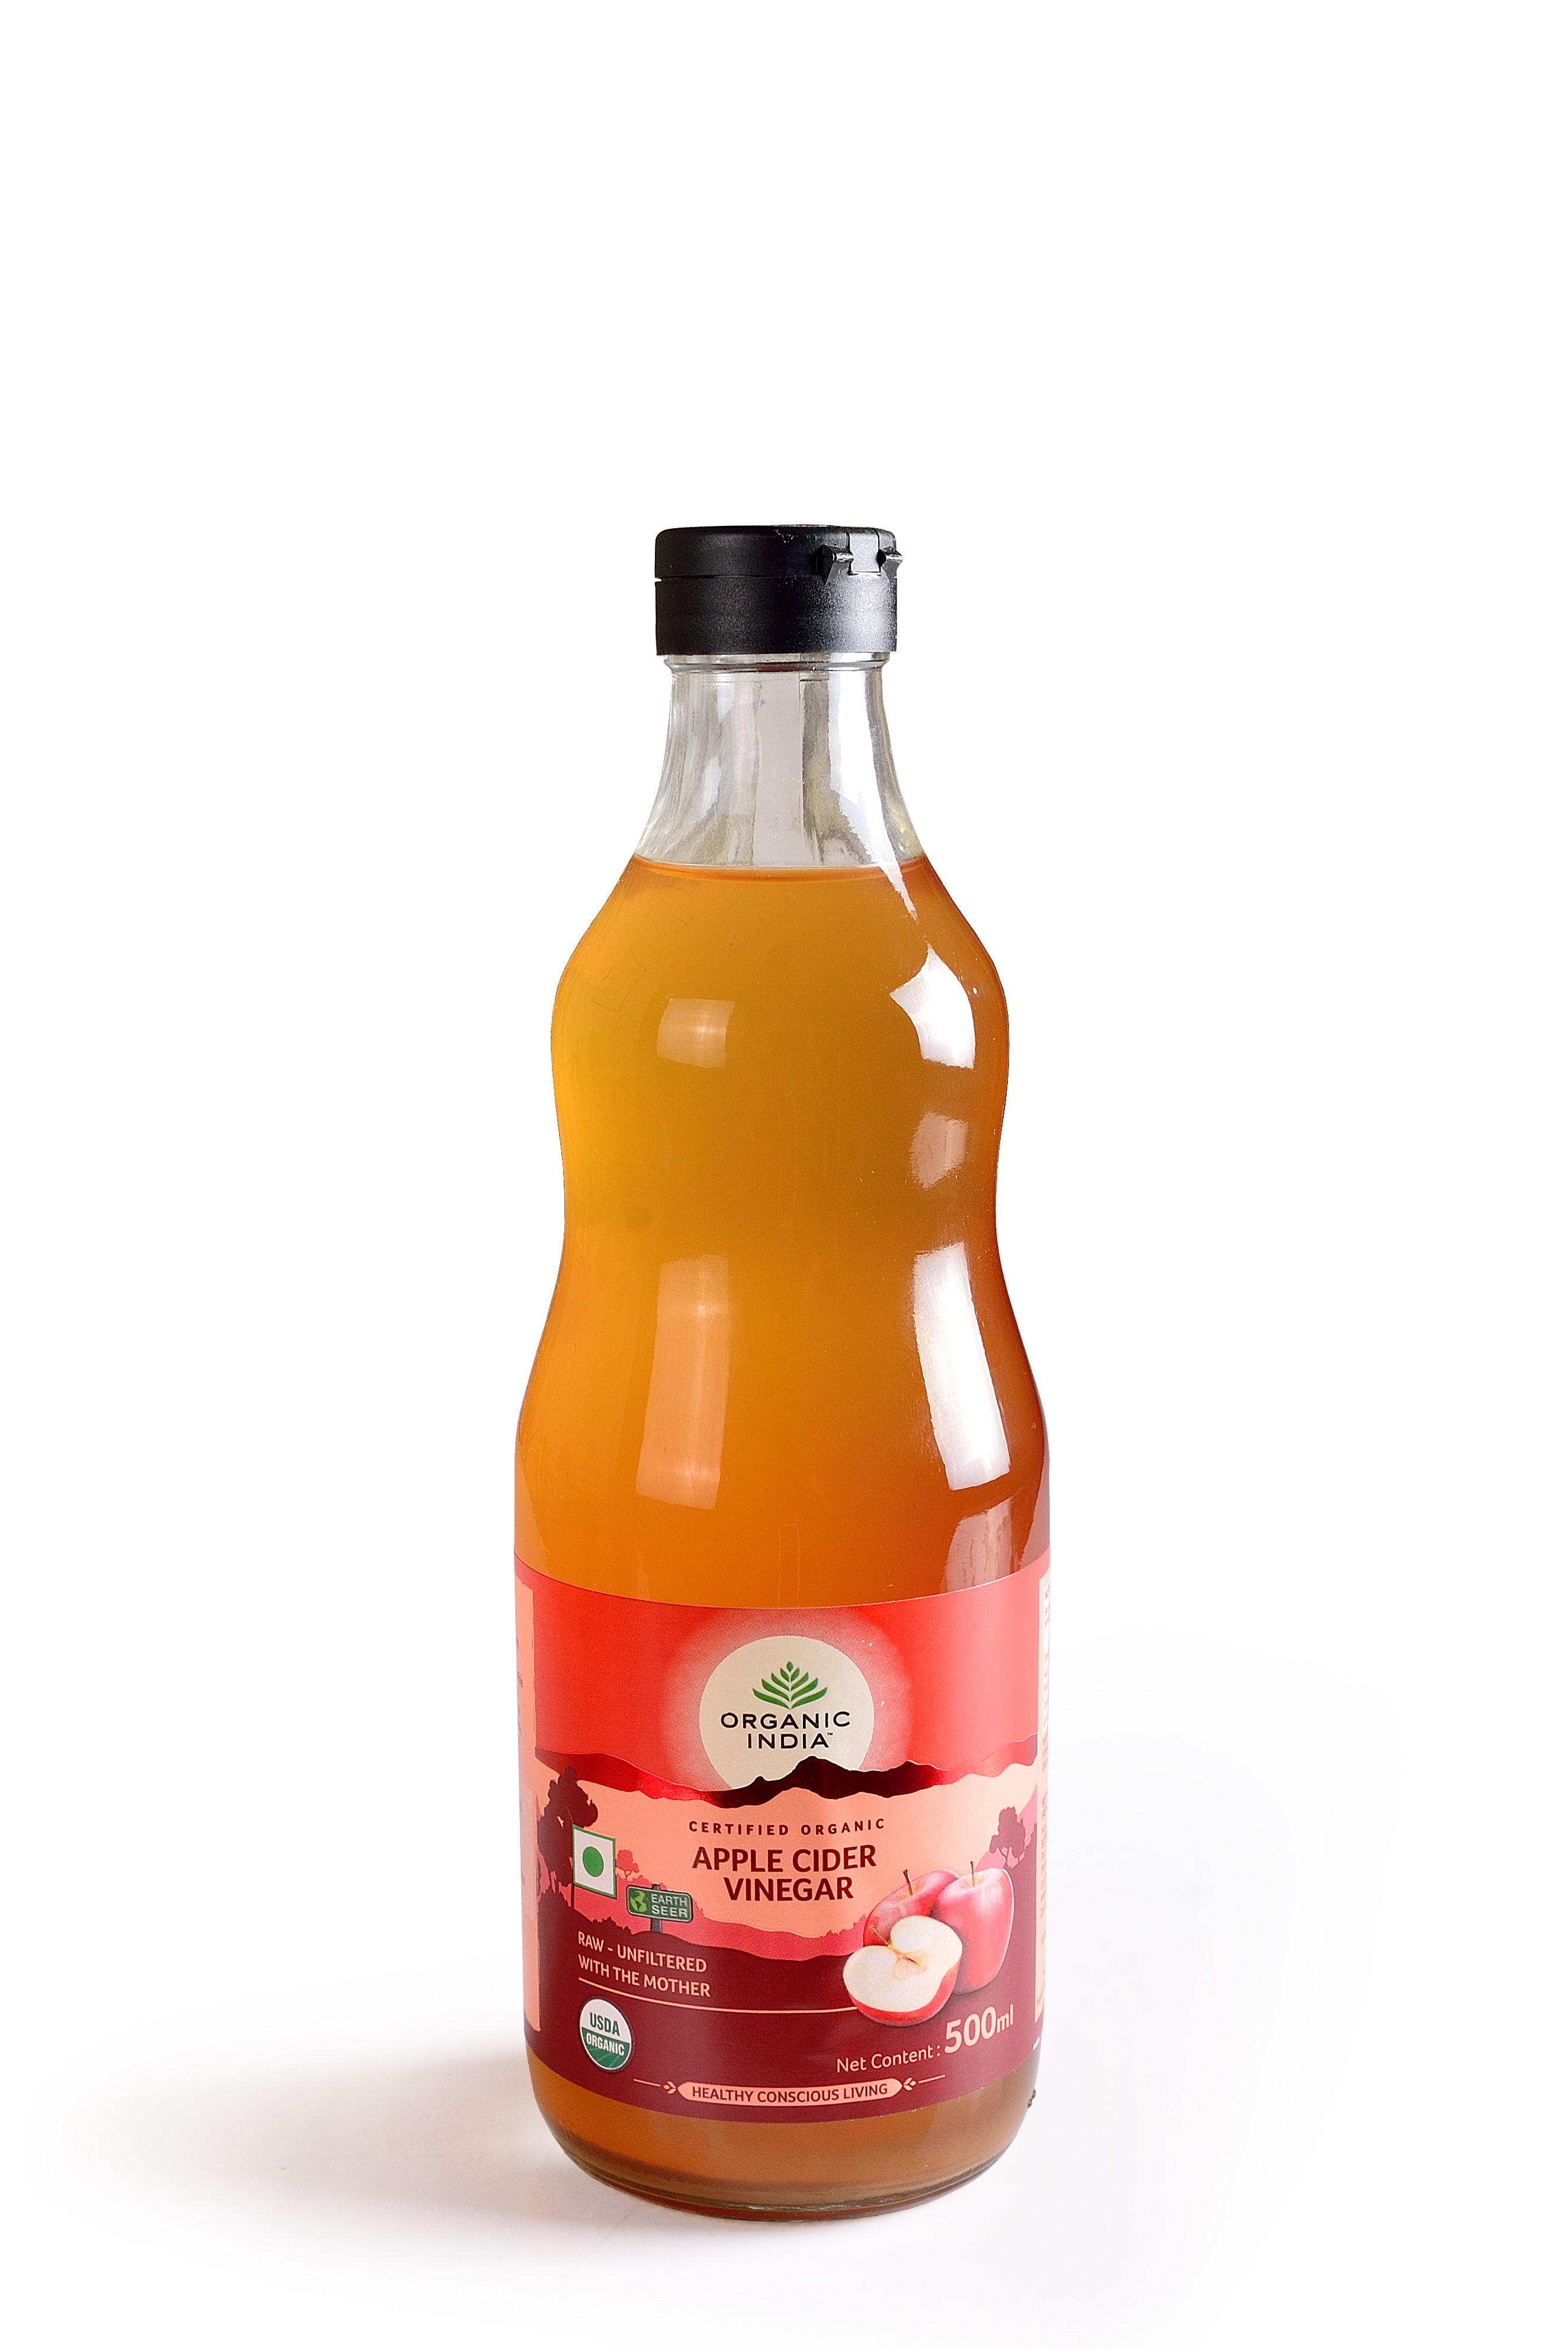 Buy Organic India Apple Cider Vinegar at Best Price Online